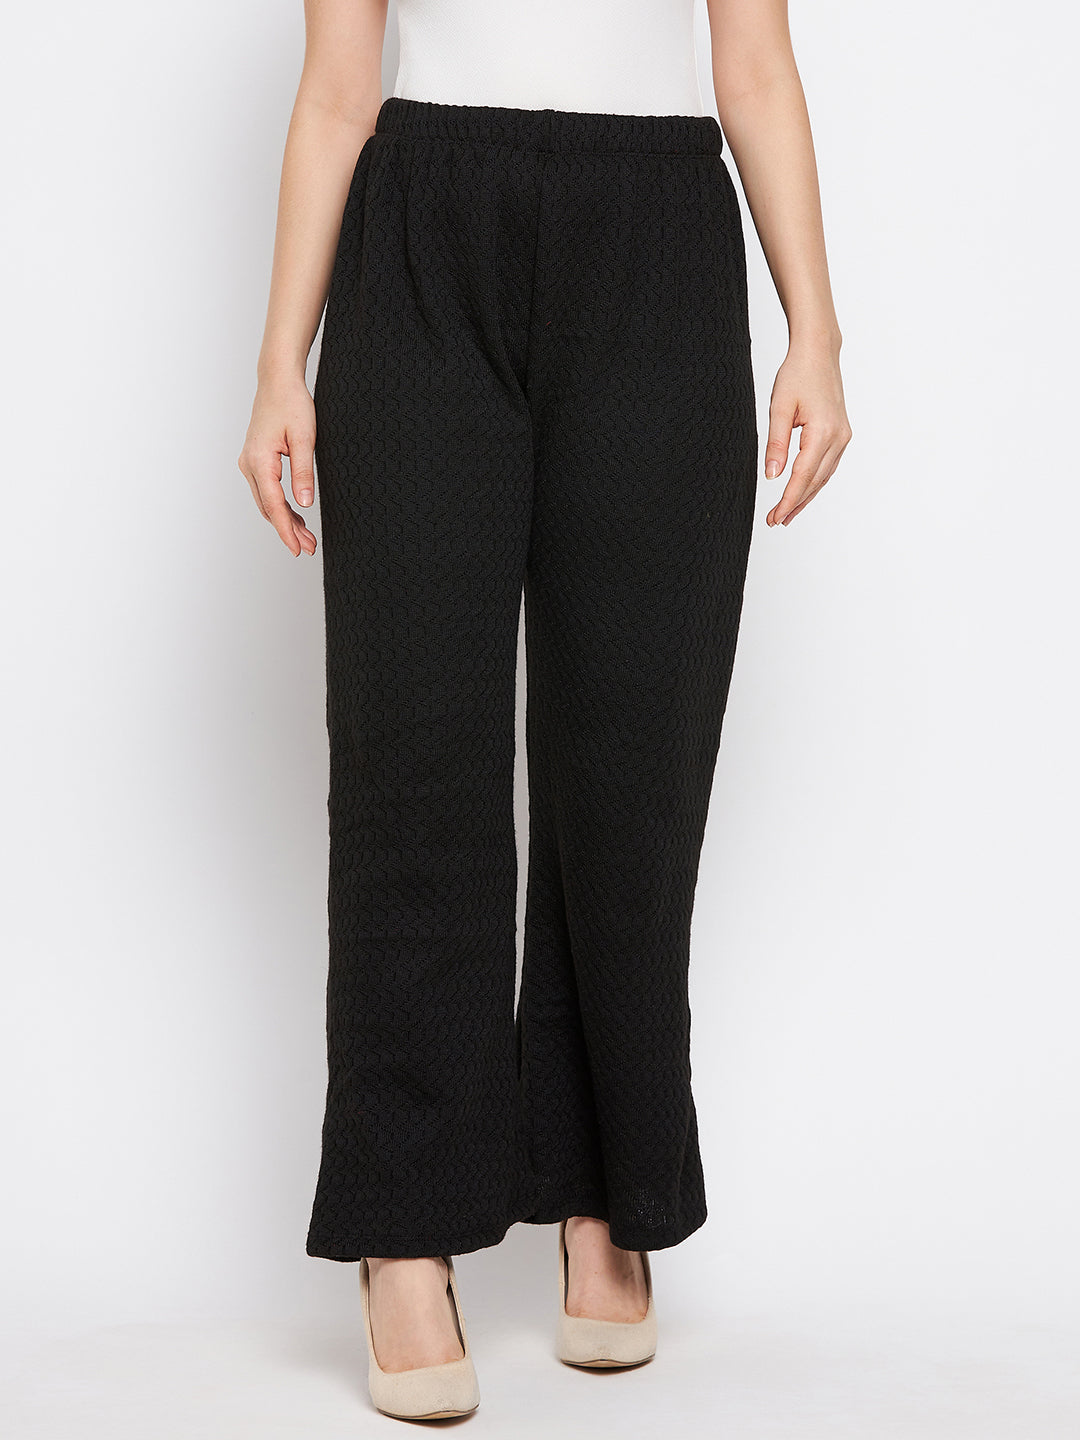 Buy Maroon  Black Trousers  Pants for Women by INDIWEAVES Online   Ajiocom